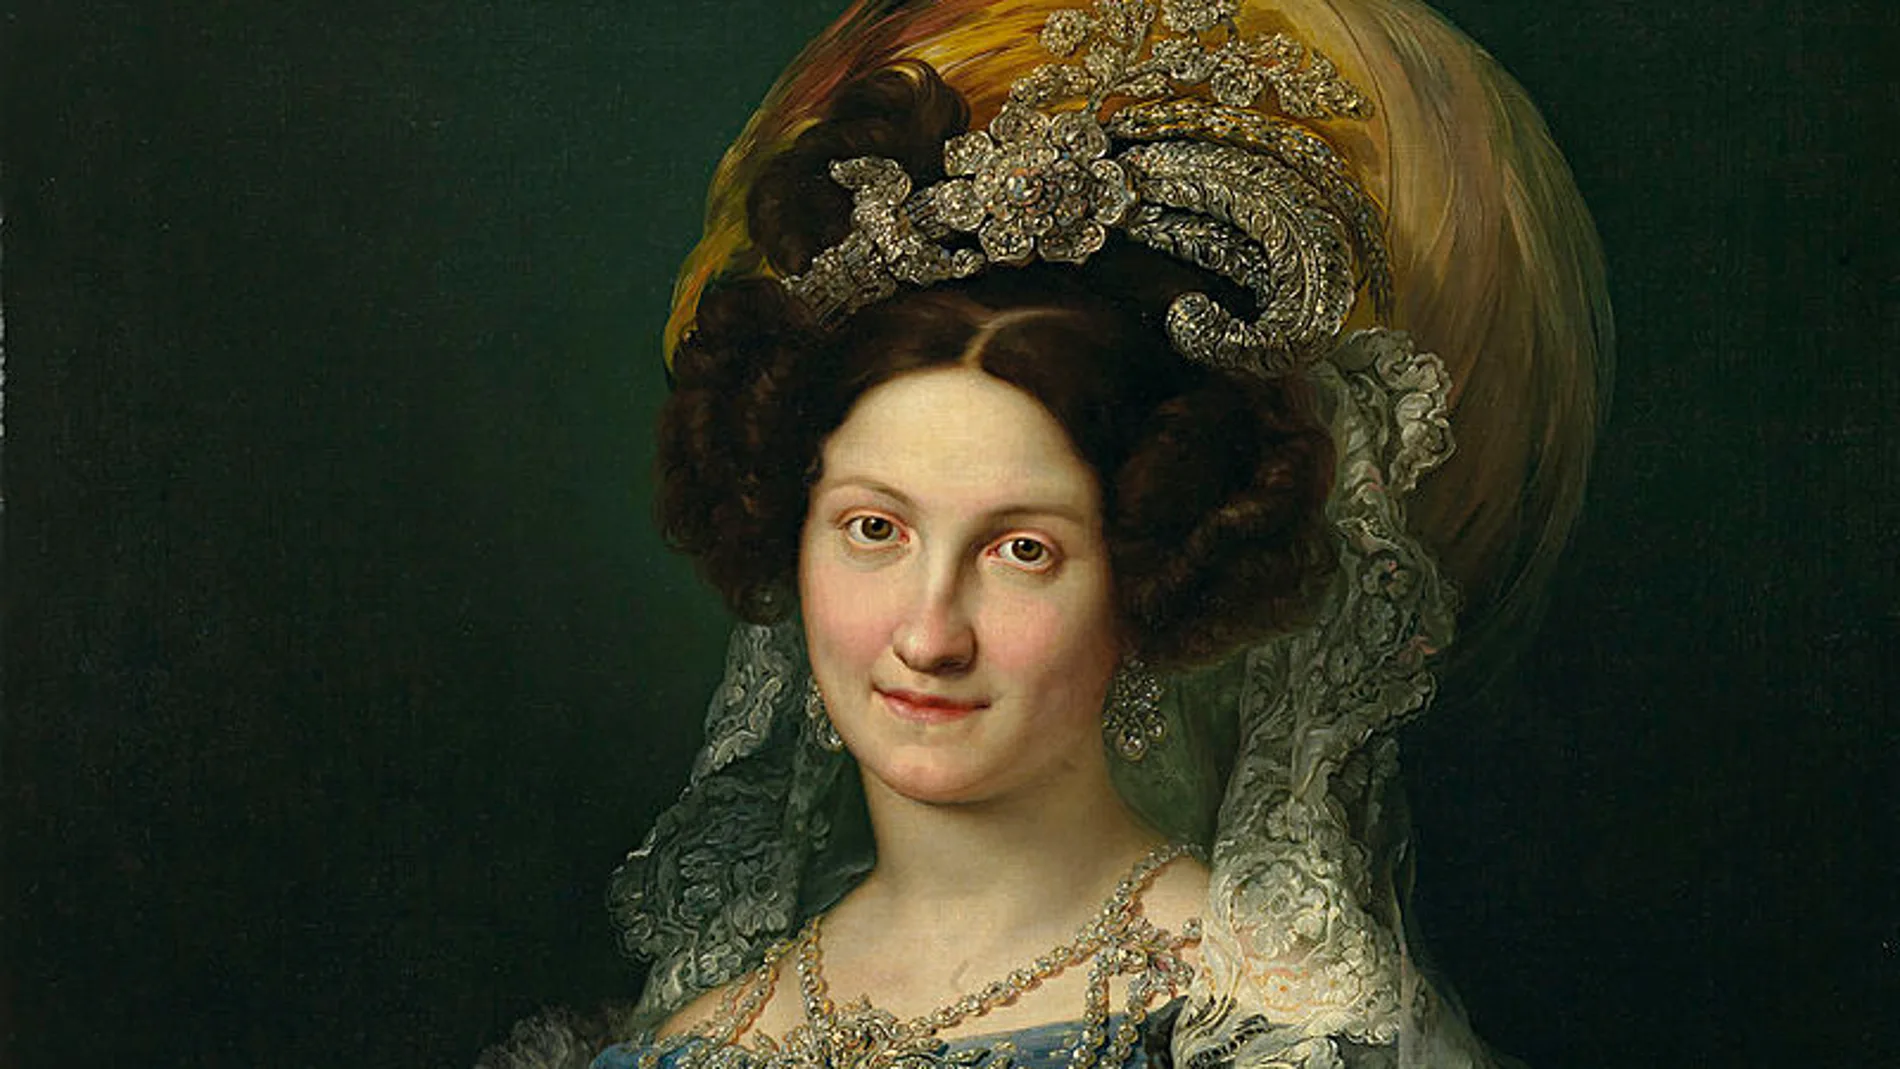 La reina María Cristina (1806-1878), reina consorte de España por su matrimonio con Fernando VII, retratada por Vicente López Portaña